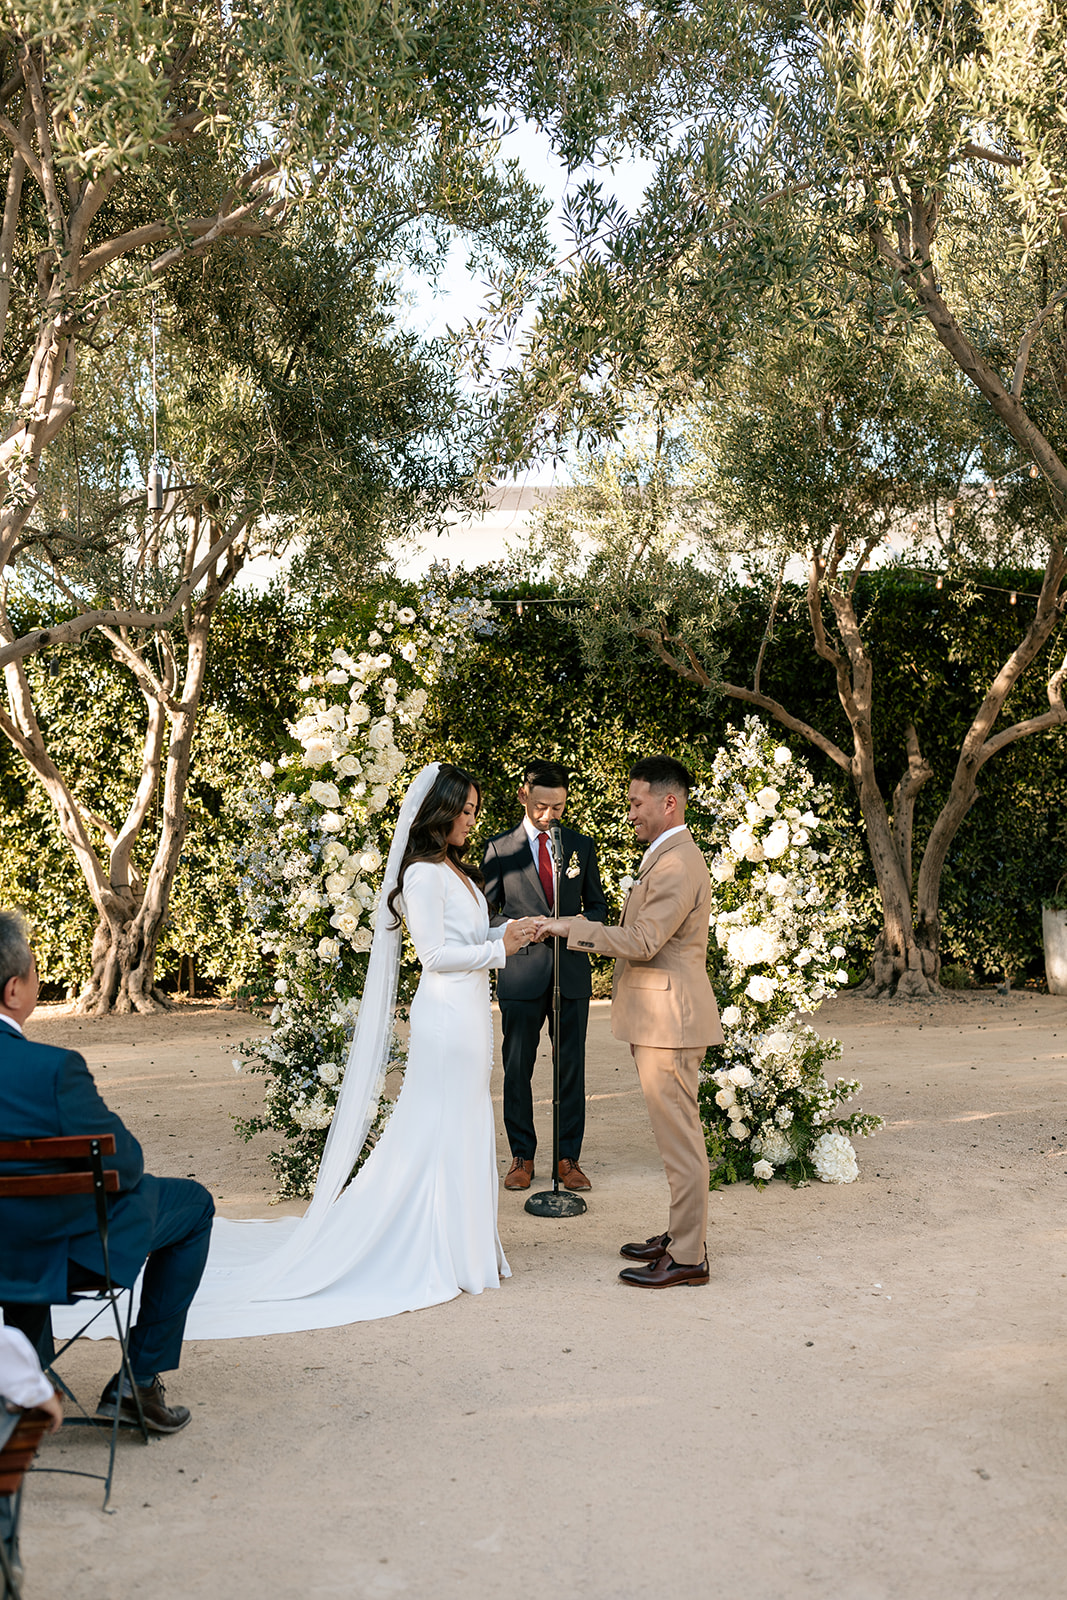 grand gimeno wedding orange county california outdoor backyard wedding ceremony bride and groom ceremony pictures